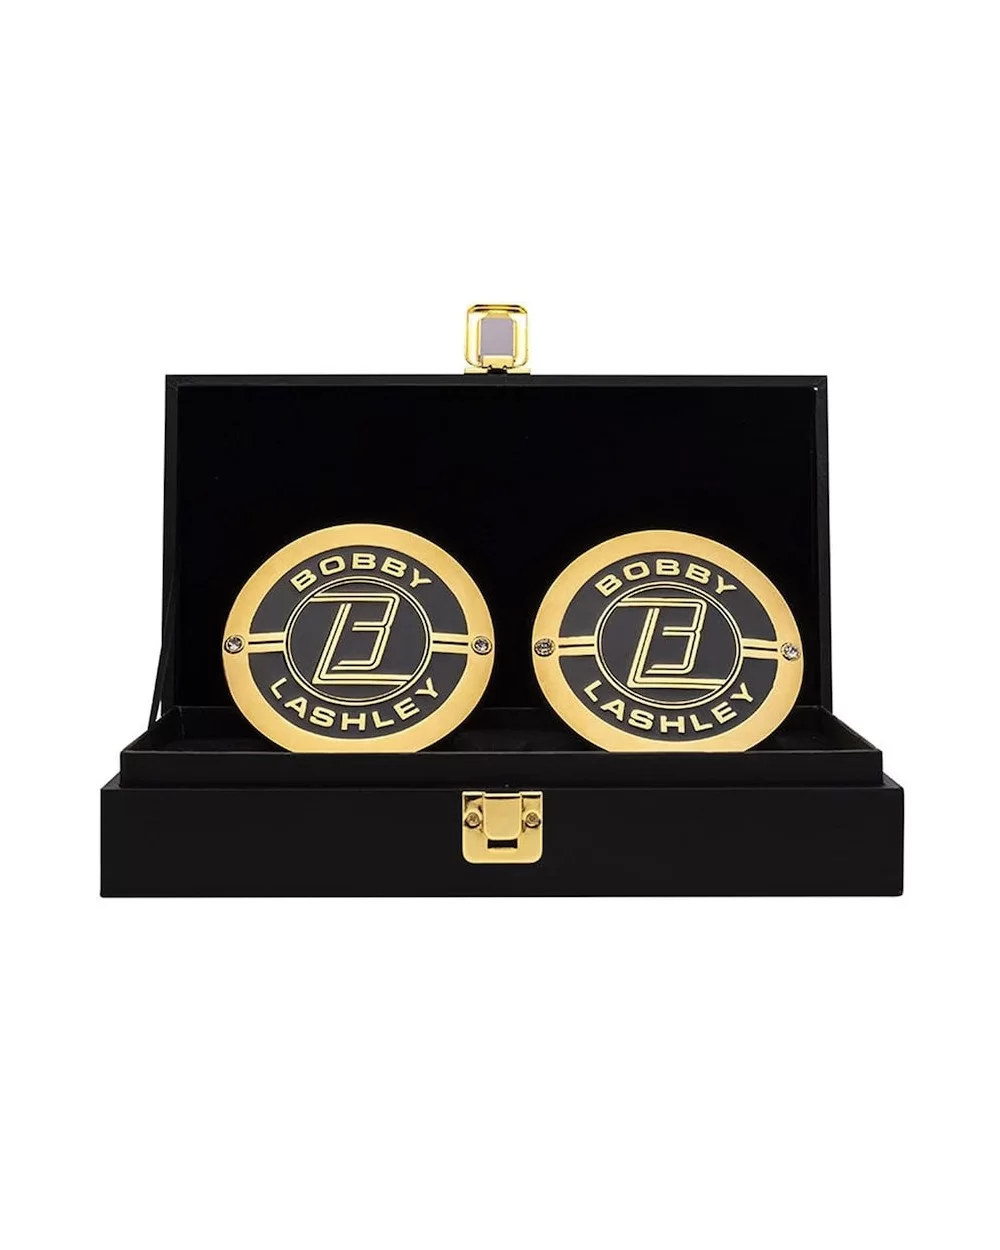 Bobby Lashley Championship Replica Side Plate Box Set $20.72 Collectibles